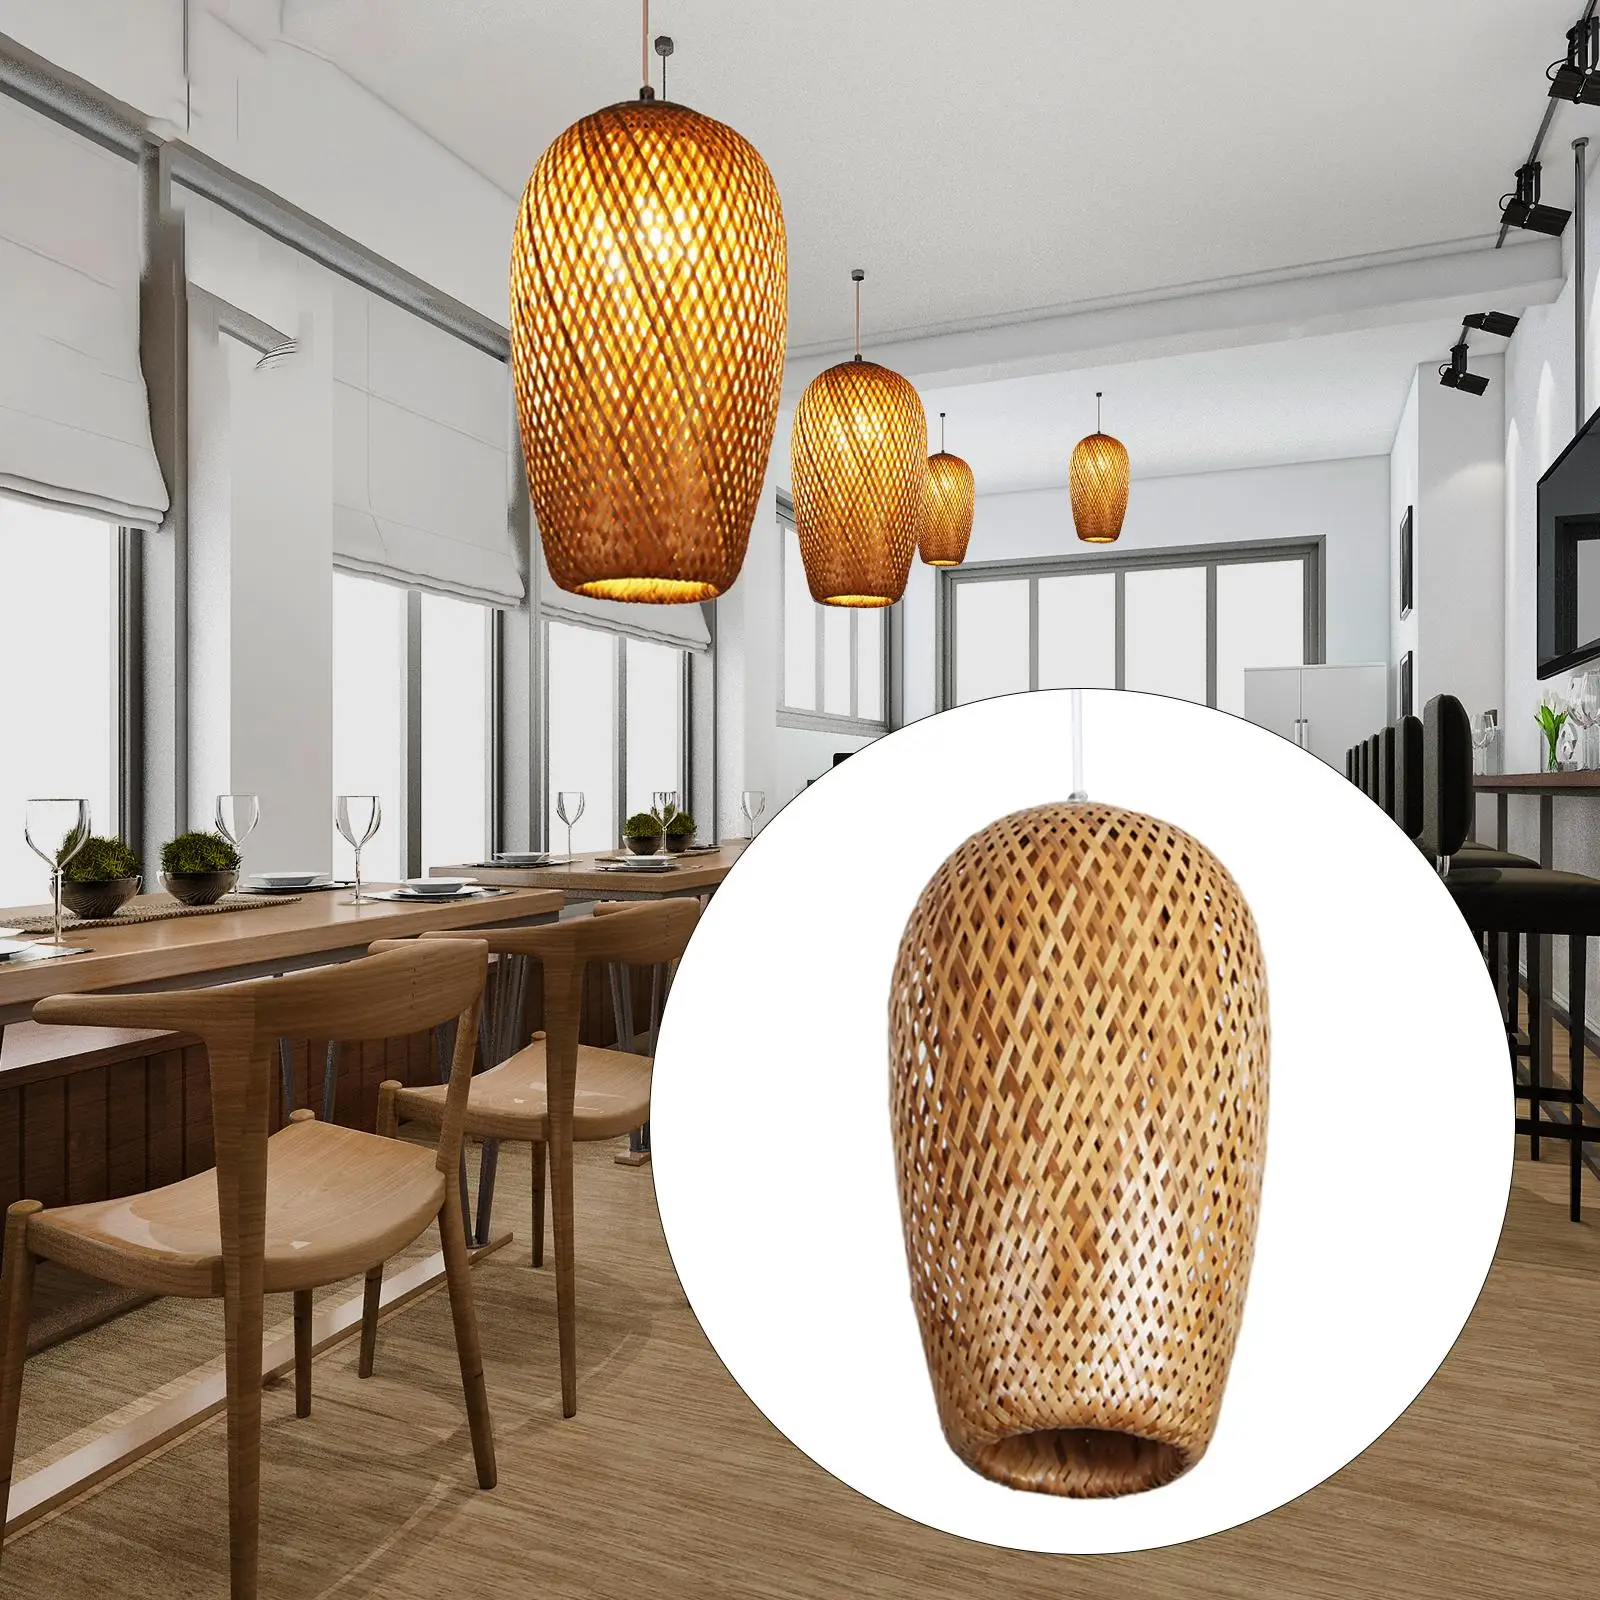 Hand Woven Bamboo Pendant Light Lamp Shade Ceiling Lamp Hanging Chandelier for Restaurant Kitchen Dining Room Decor